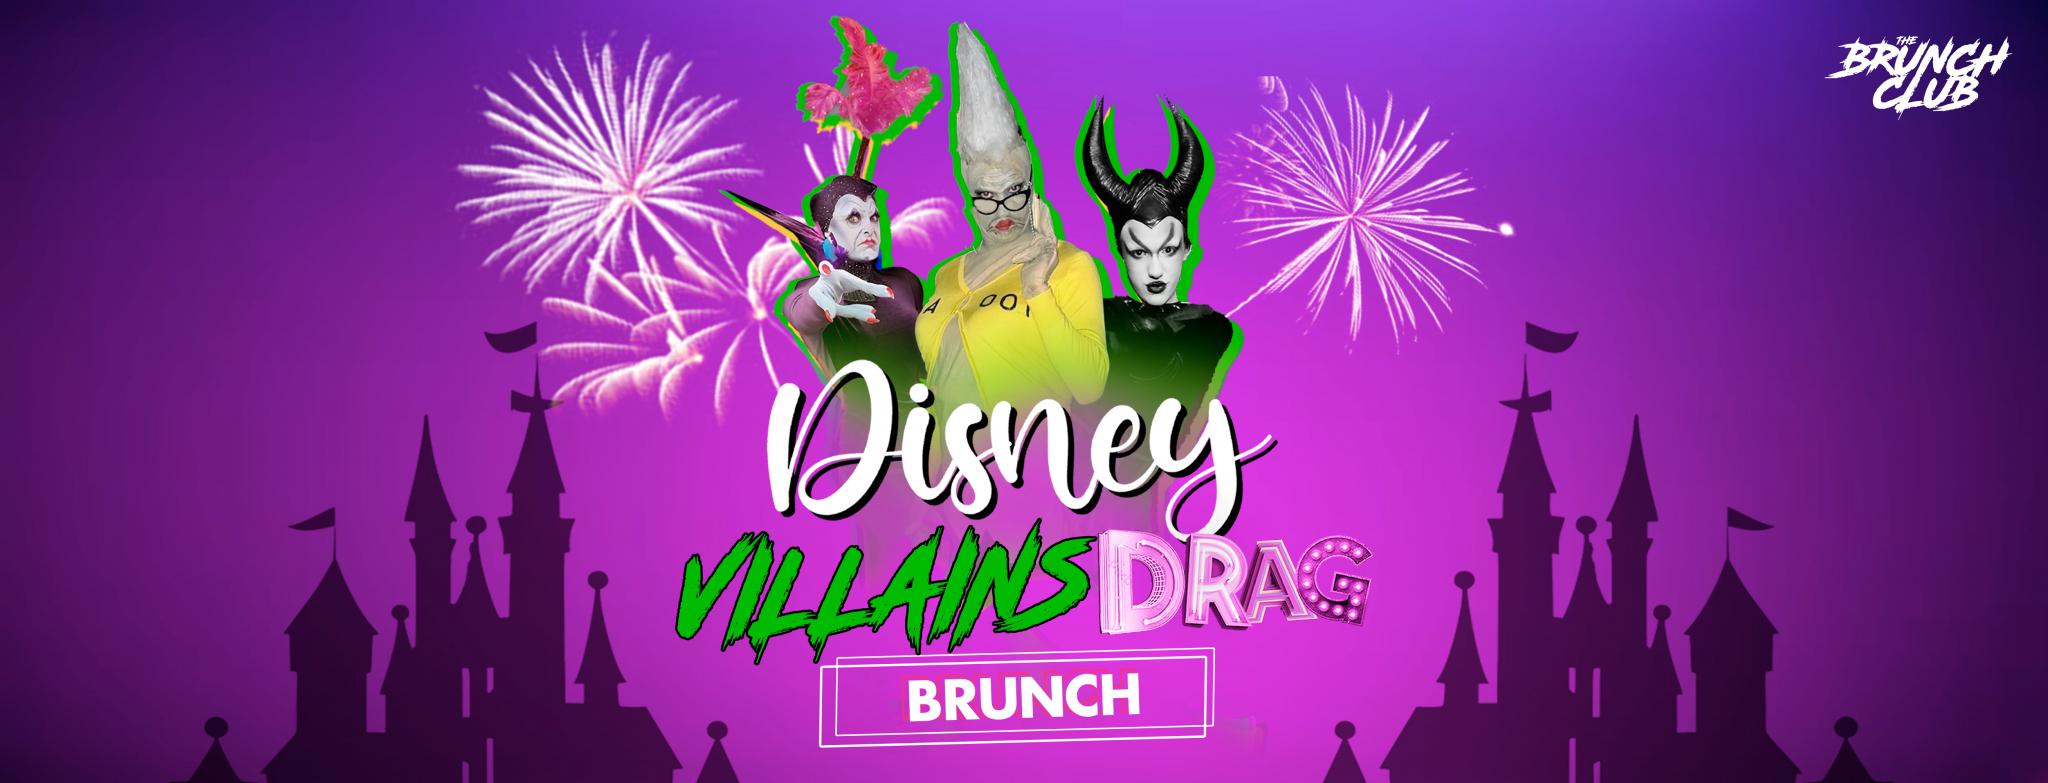 Disney Villains Drag Bottomless Brunch - Lincoln